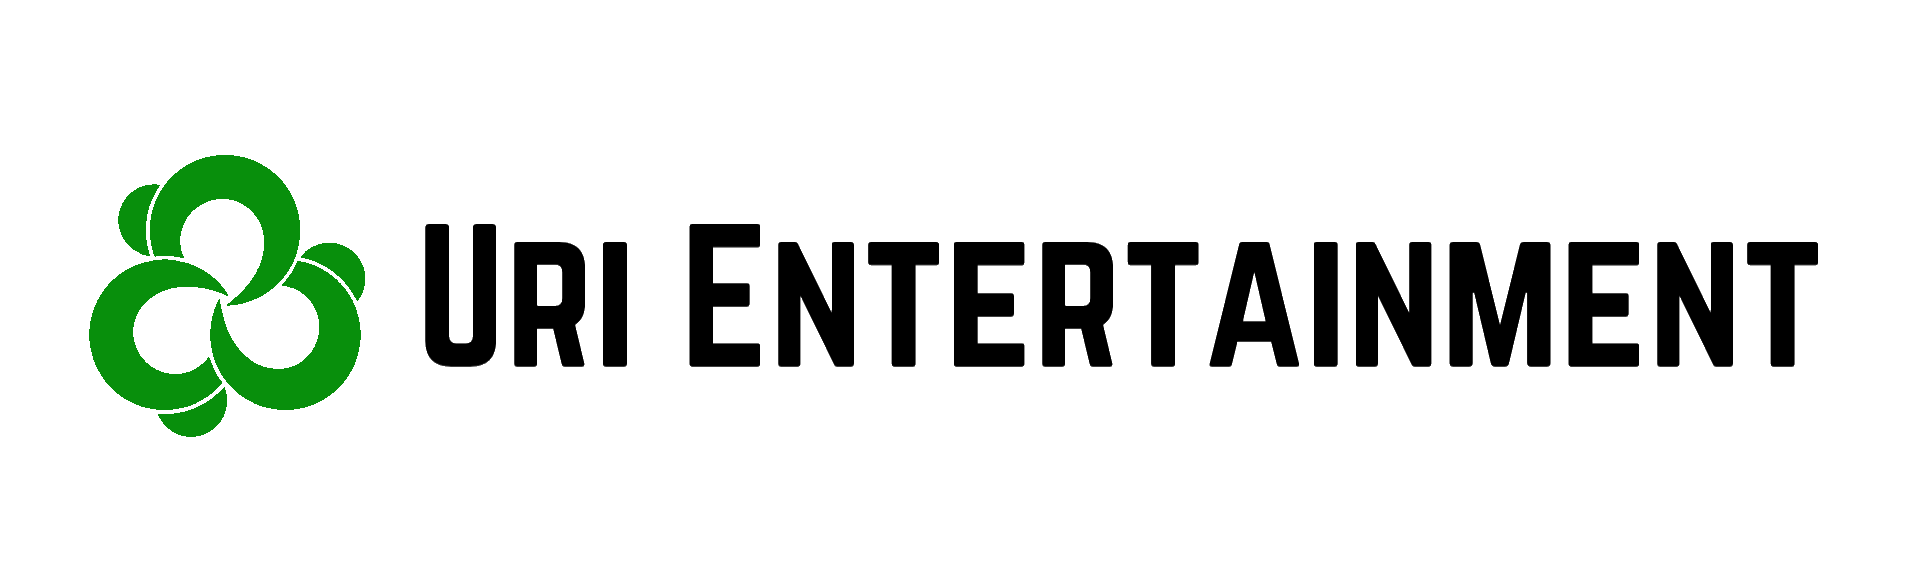 Uri Entertainment logo 1.png